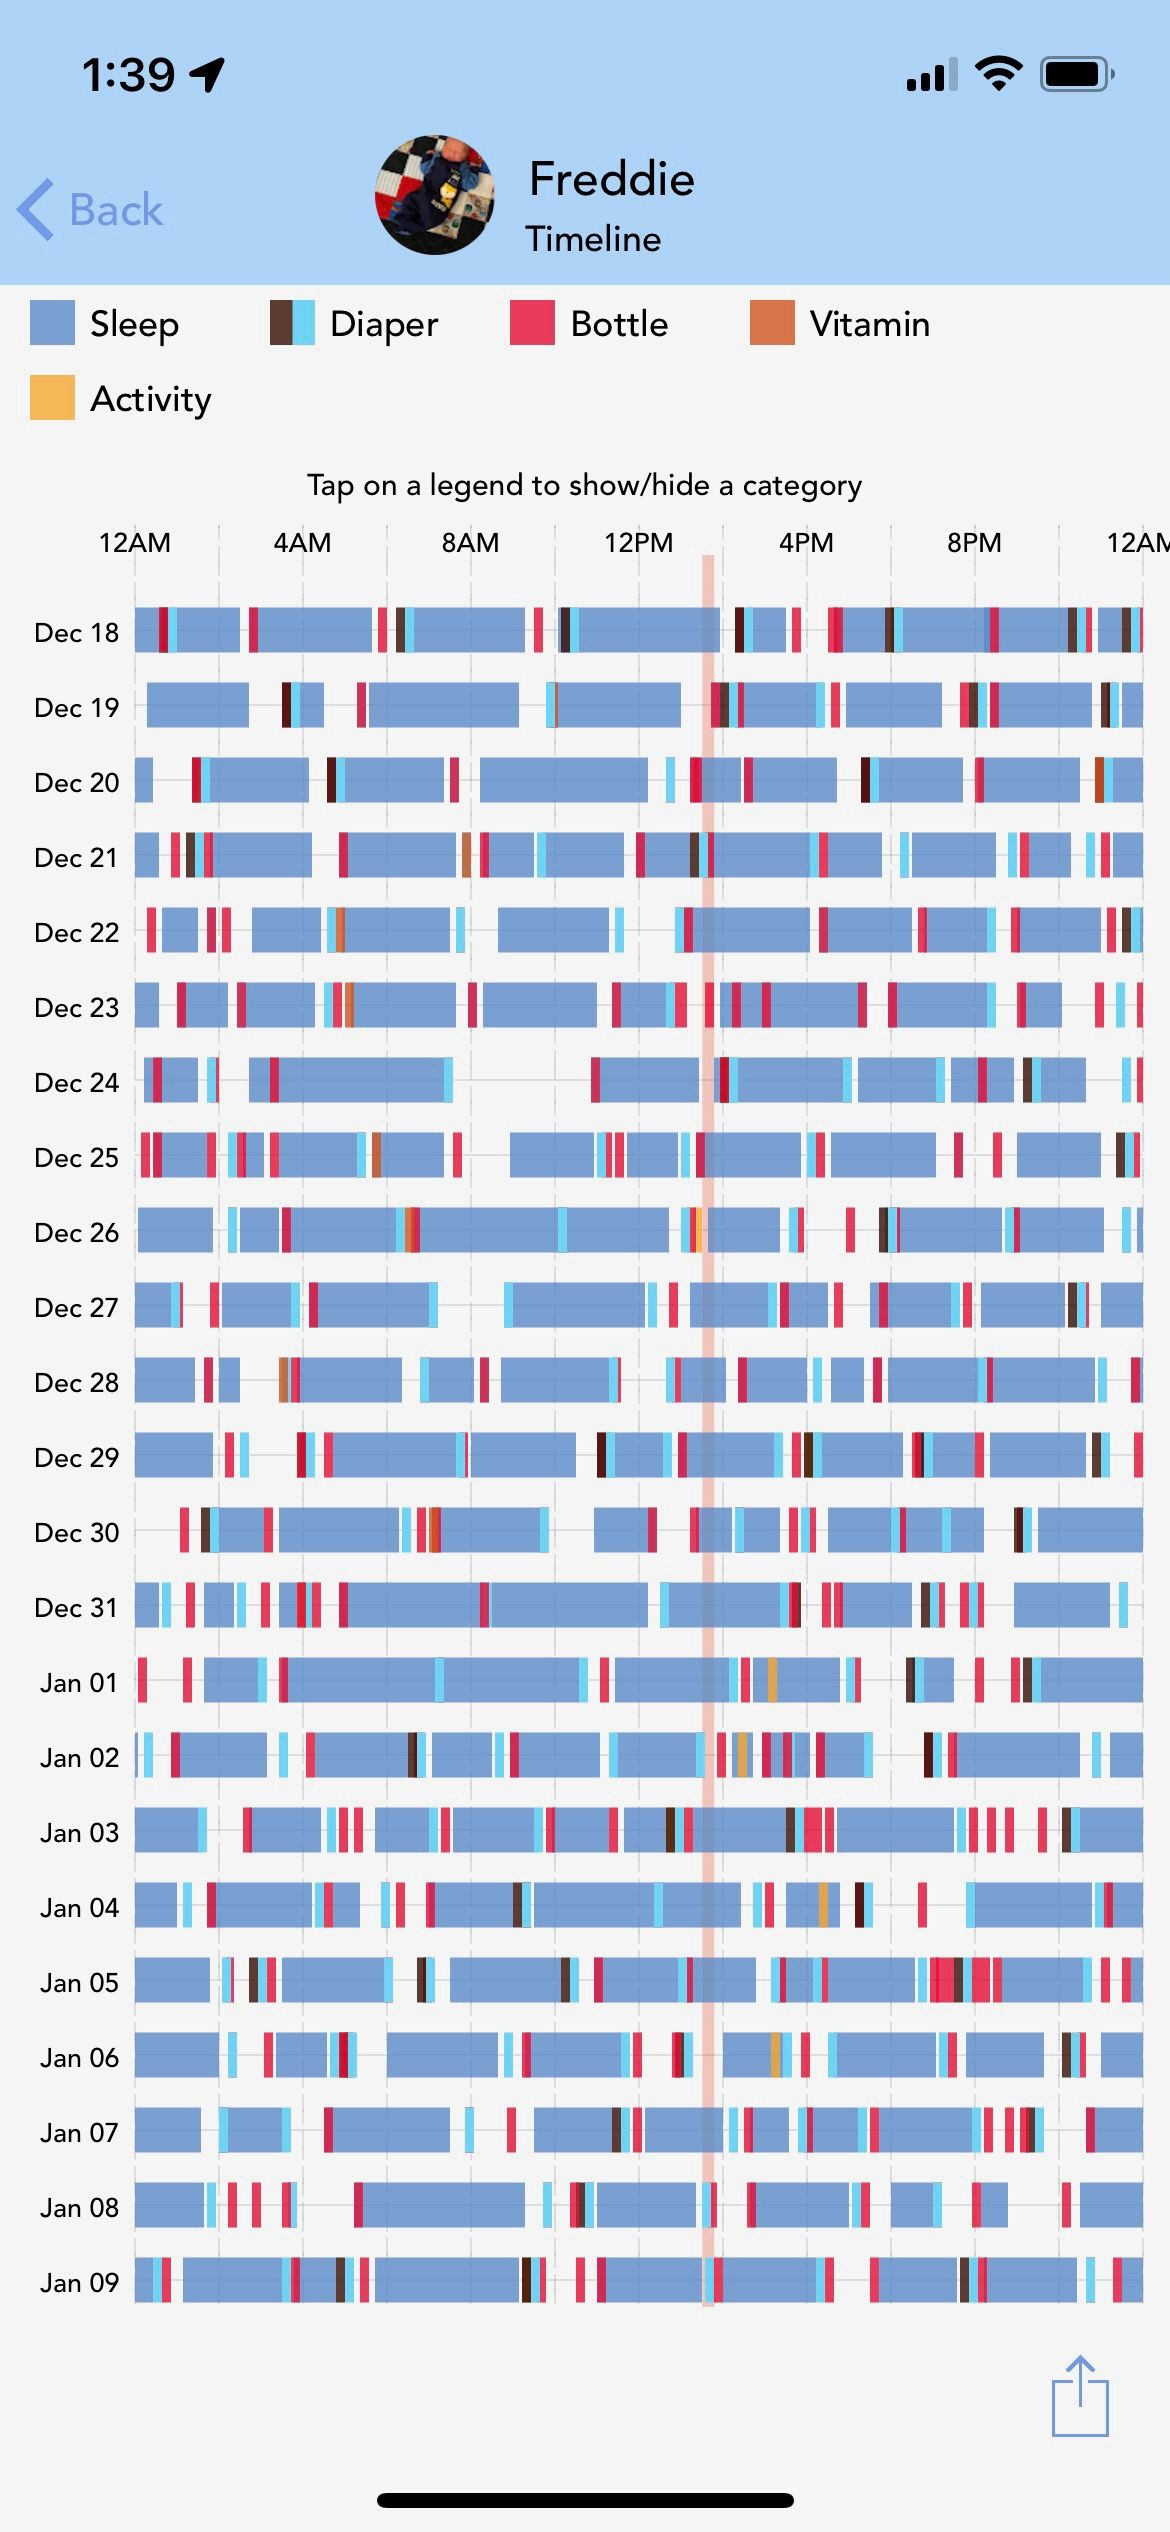 Timeline of Freddie's activity between Dec 18 and Jan 9